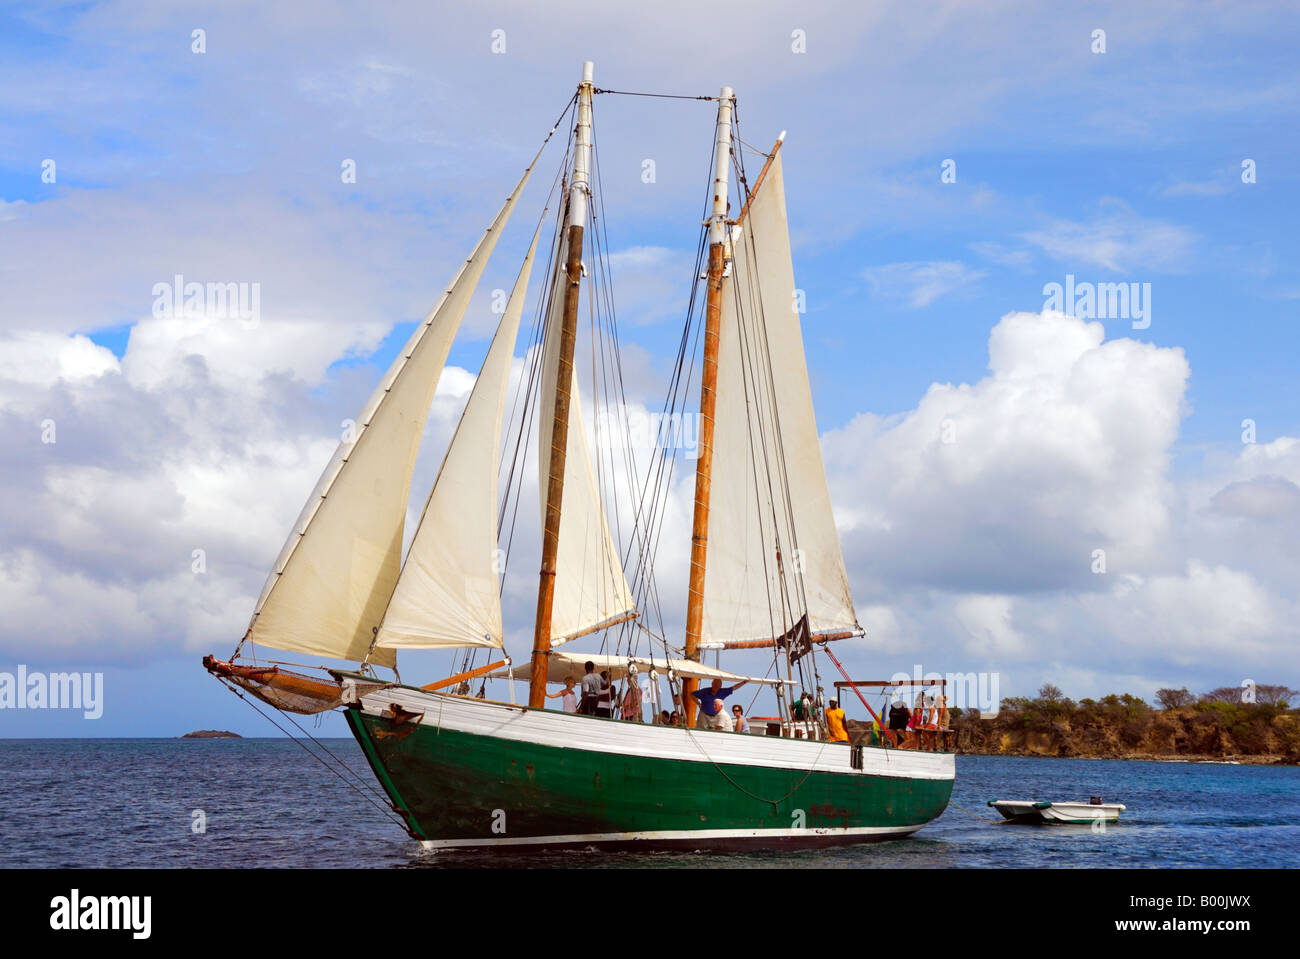 Old, gaff-rigged schooner in Saline Bay, Mayreau, Grenadines, Caribbean Stock Photo